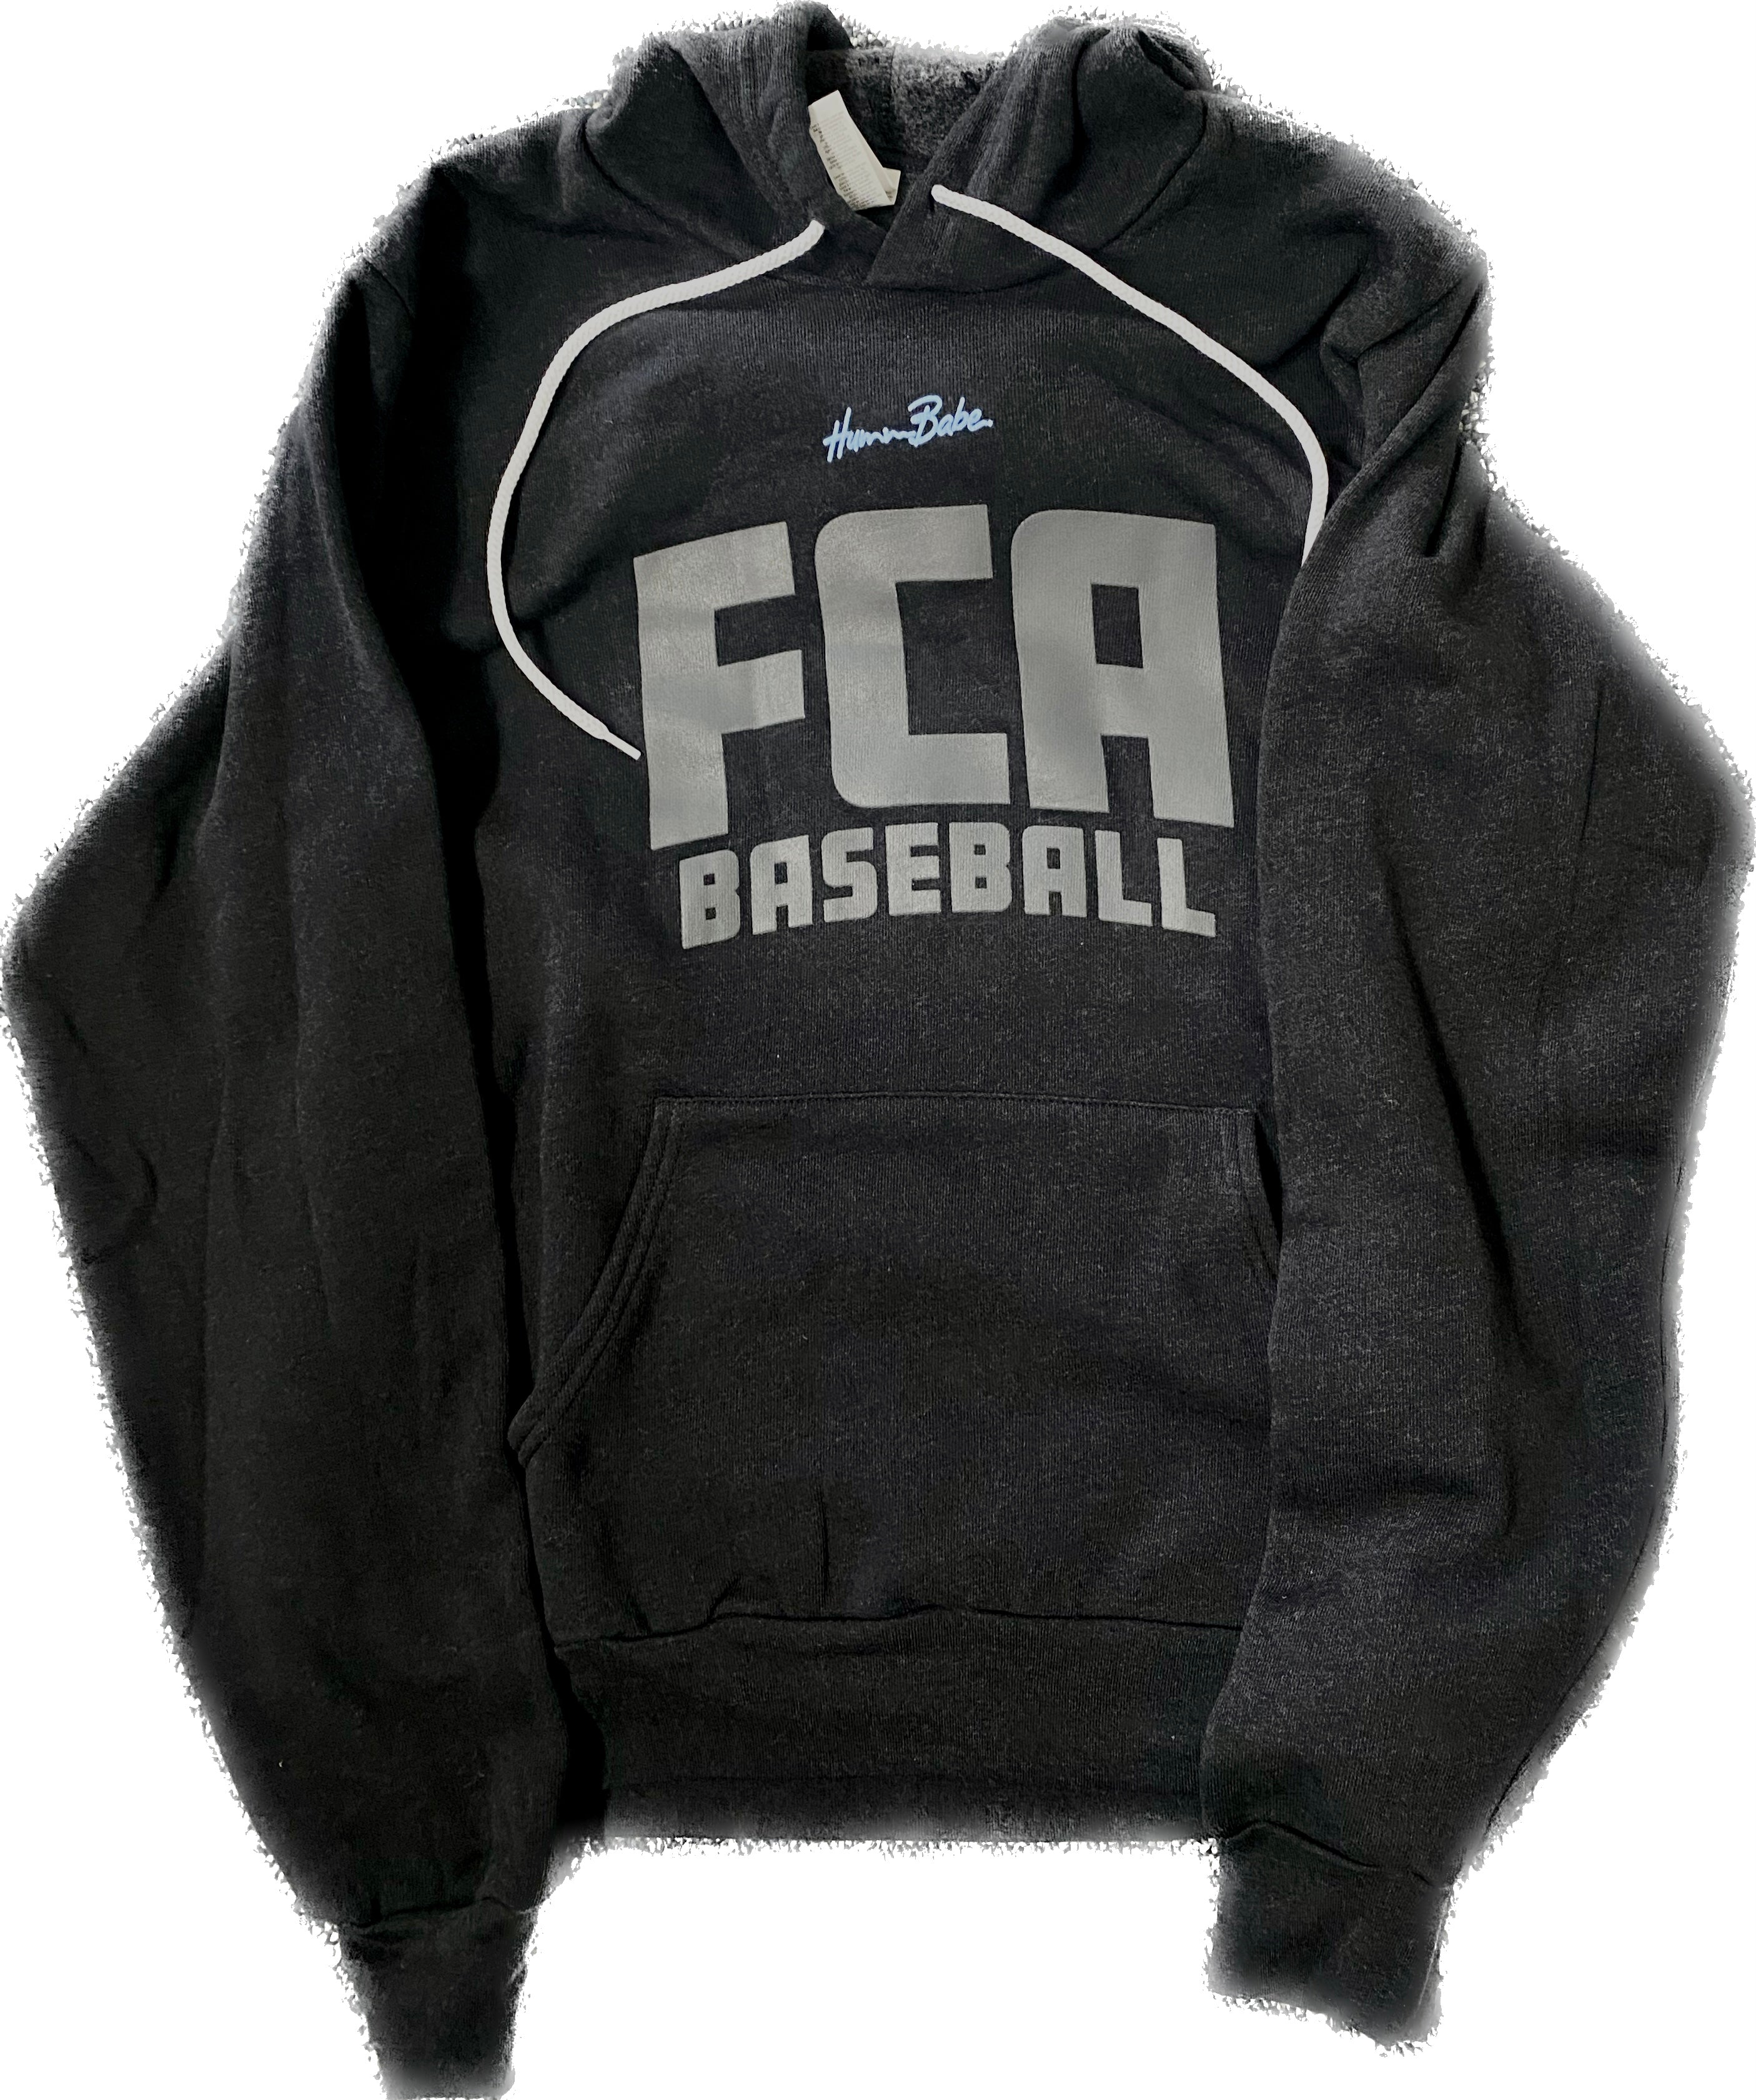 2023FCA Baseball Sweatshirt